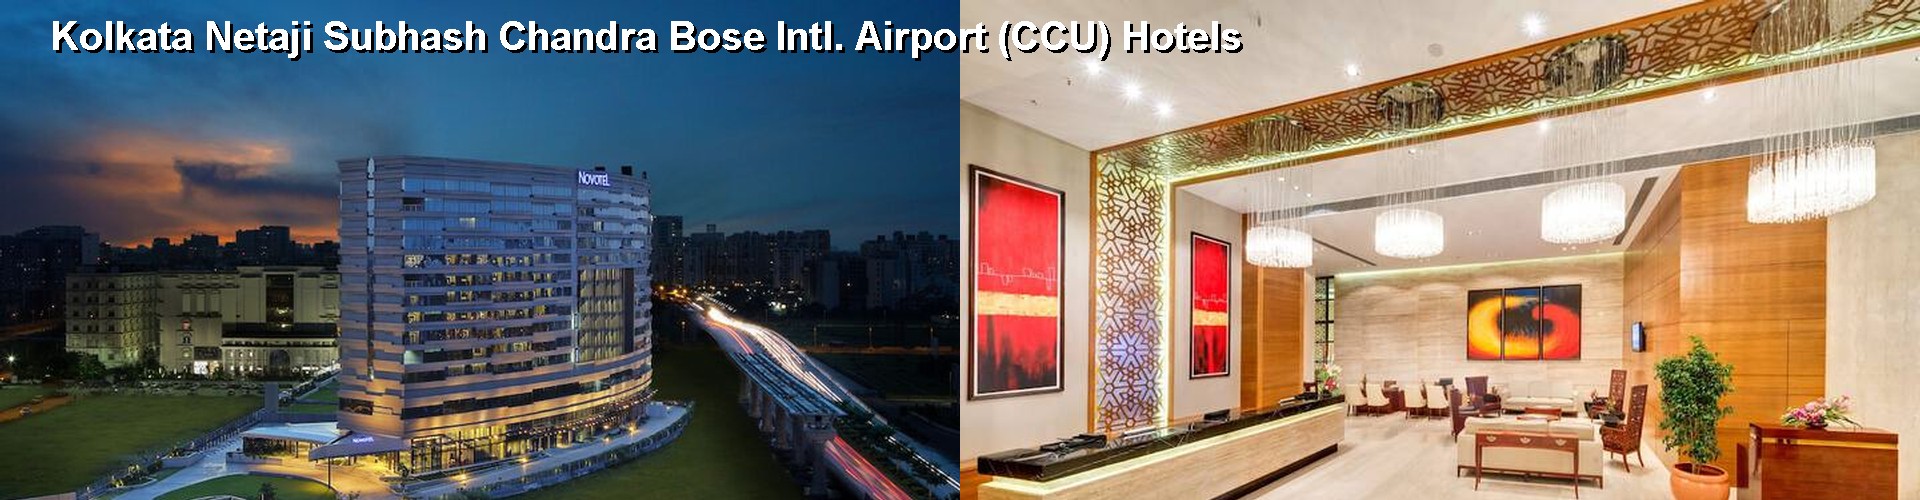 5 Best Hotels near Kolkata Netaji Subhash Chandra Bose Intl. Airport (CCU)